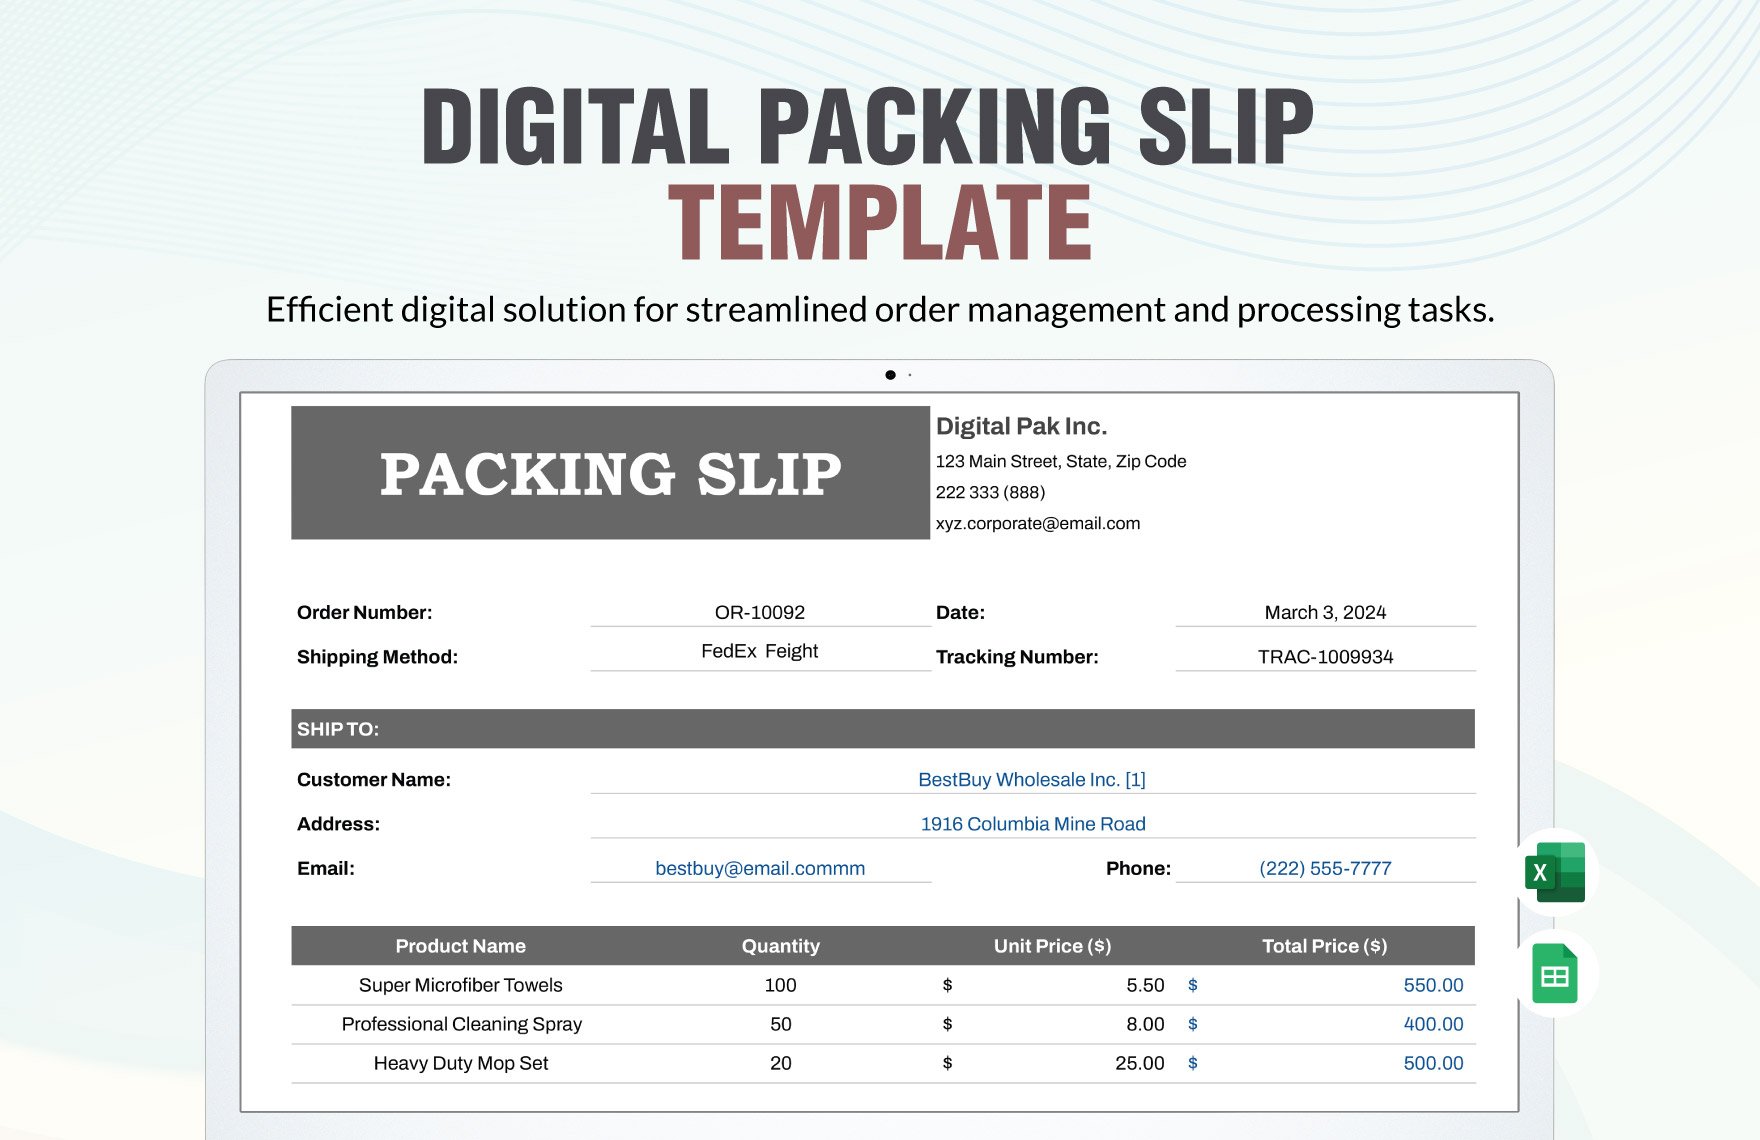 Digital Packing Slip Template in Excel, Google Sheets